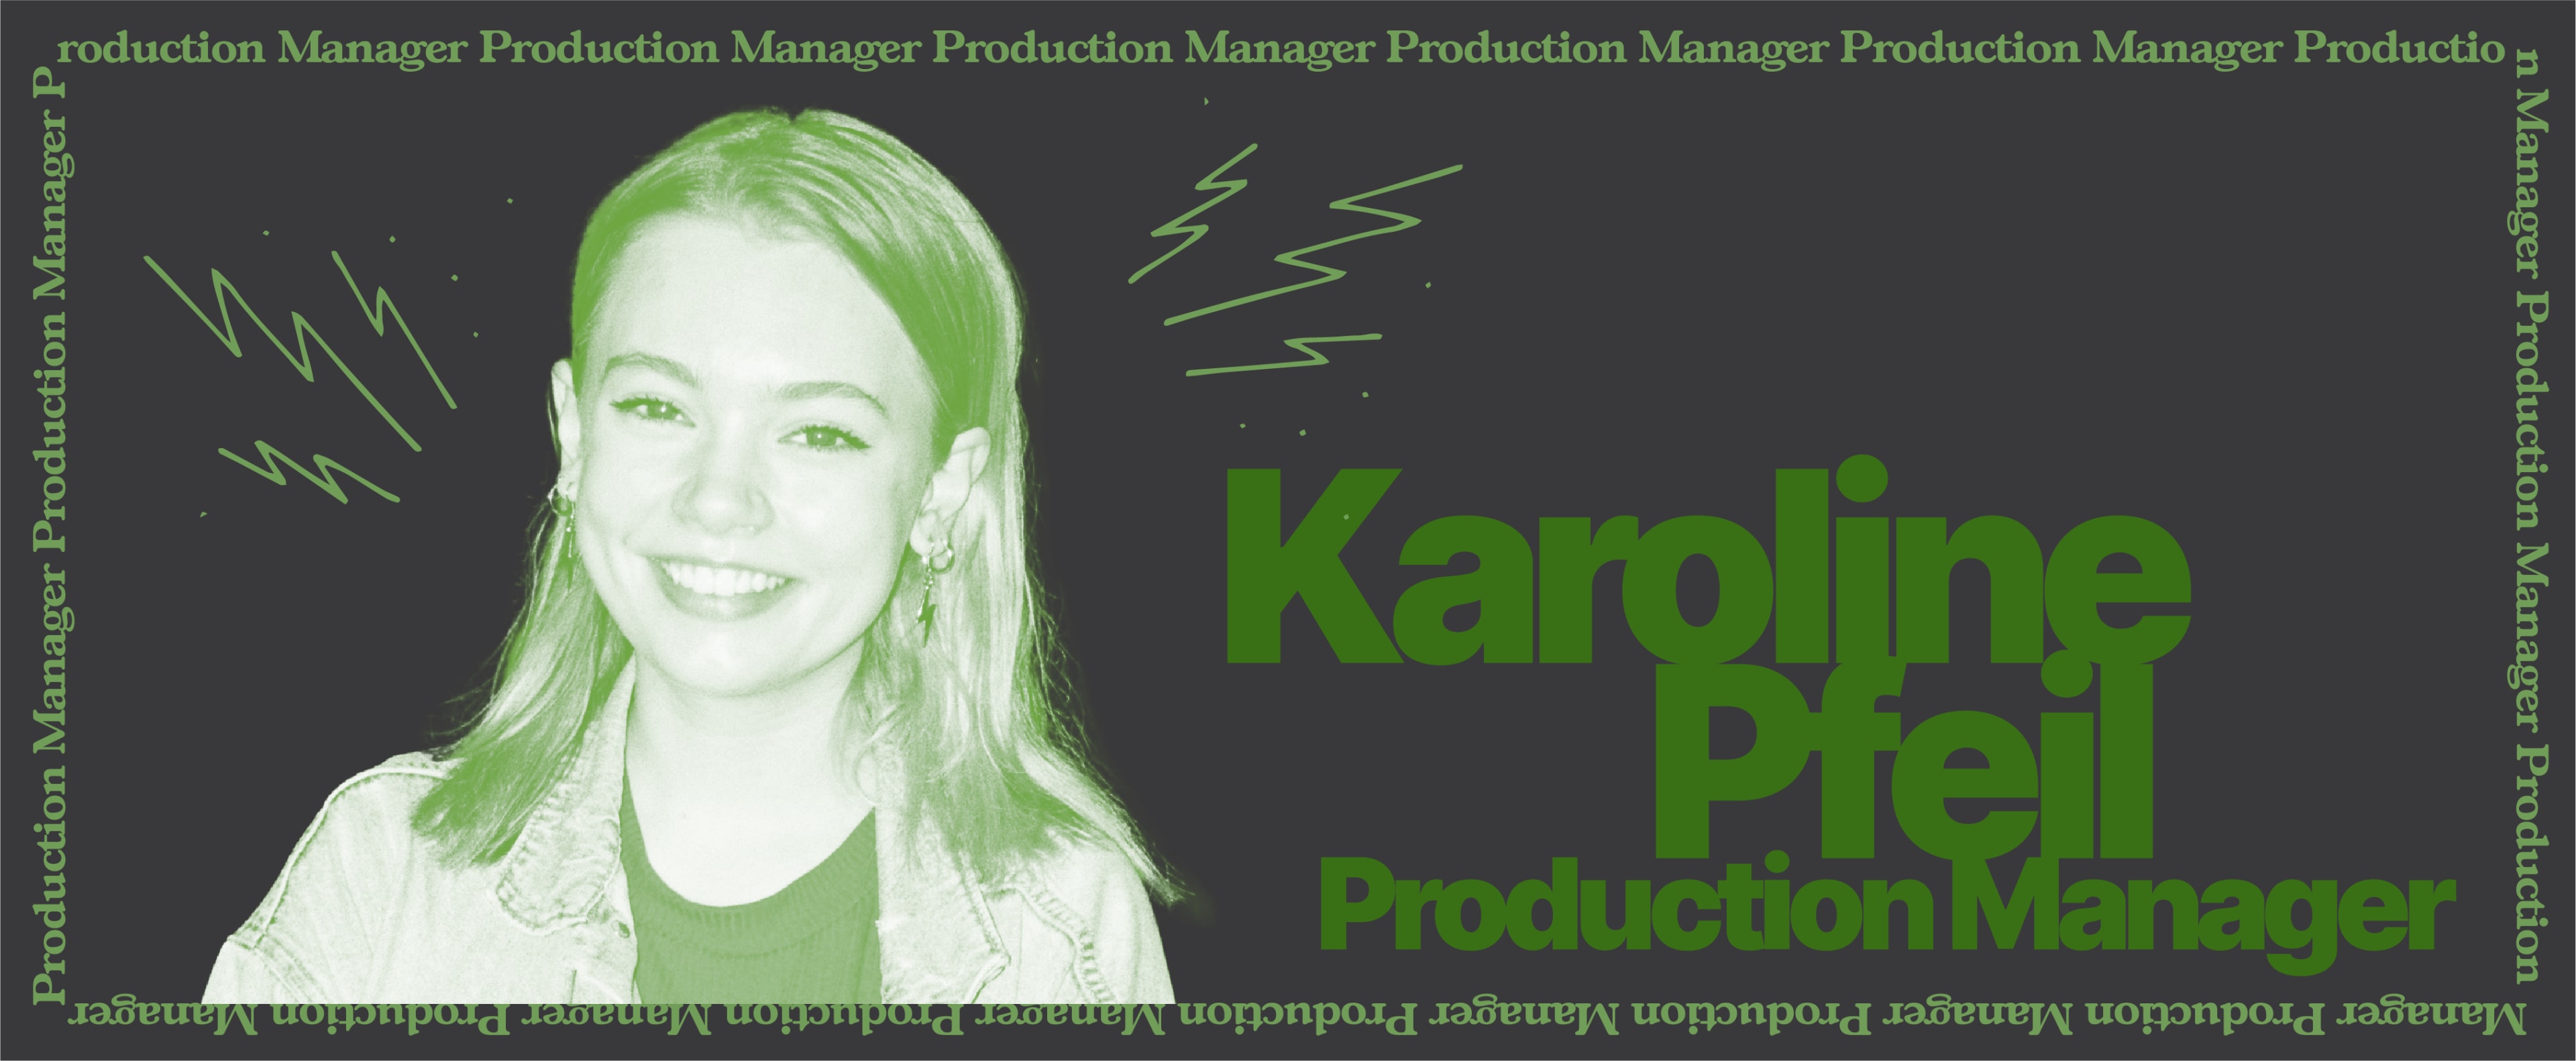 Meet Your Production Manager: Karoline Pfeil